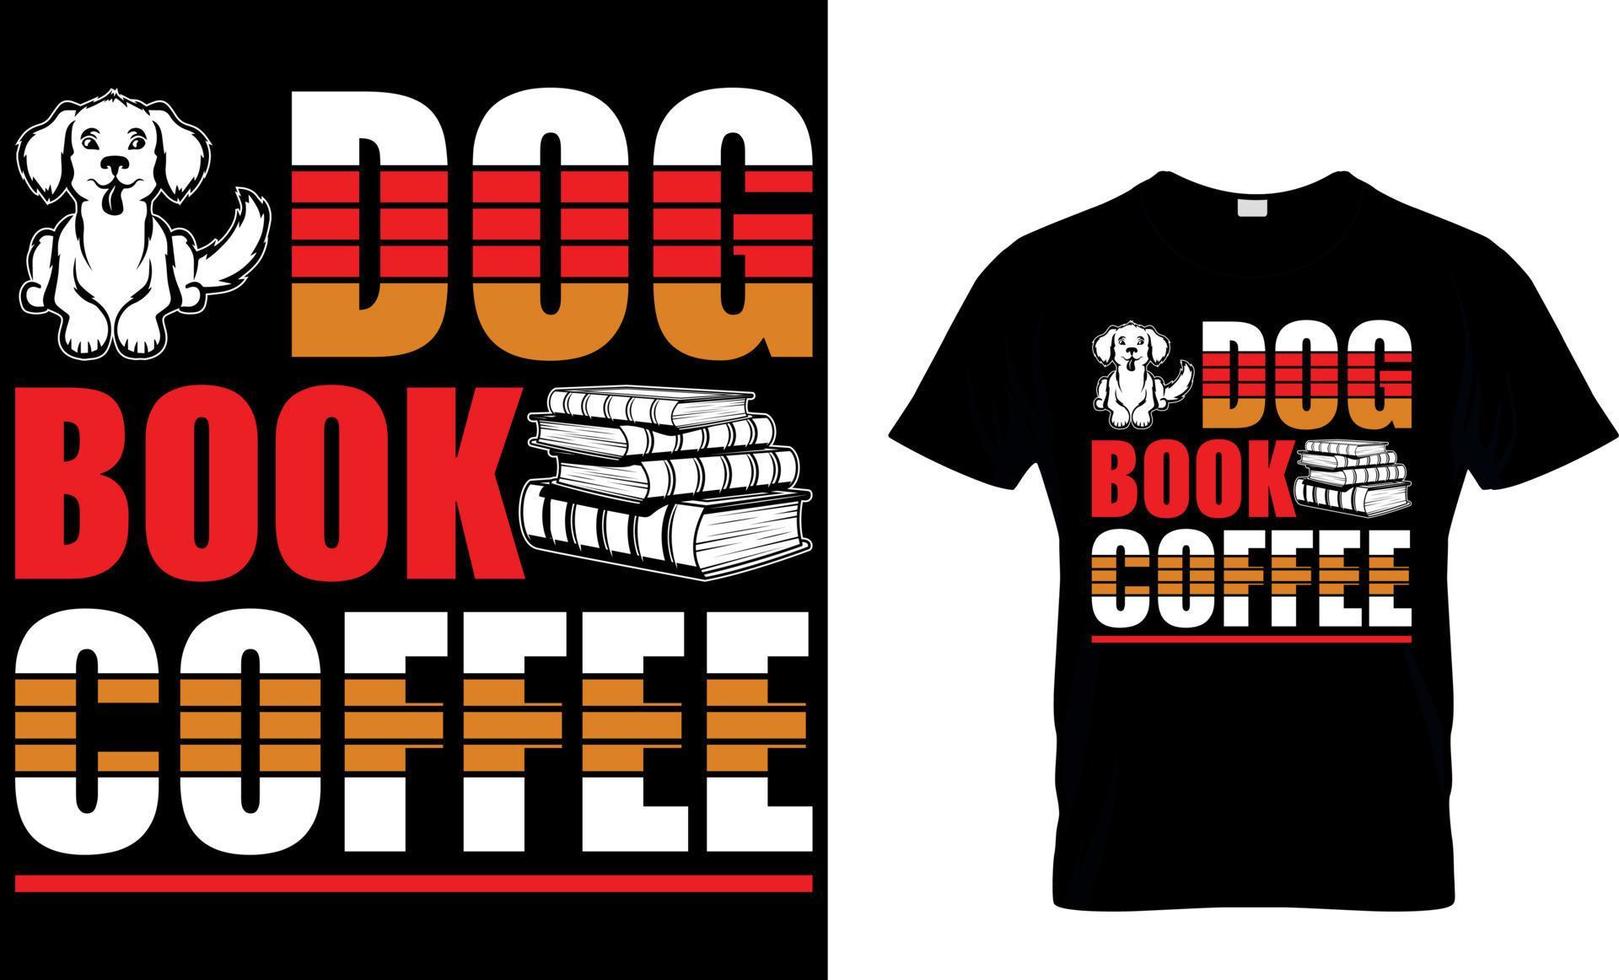 dogs books coffee. book t-shirt design. book t shirt design.book design. read design. reading t shirt design. cat design. dog design. coffee design. vector